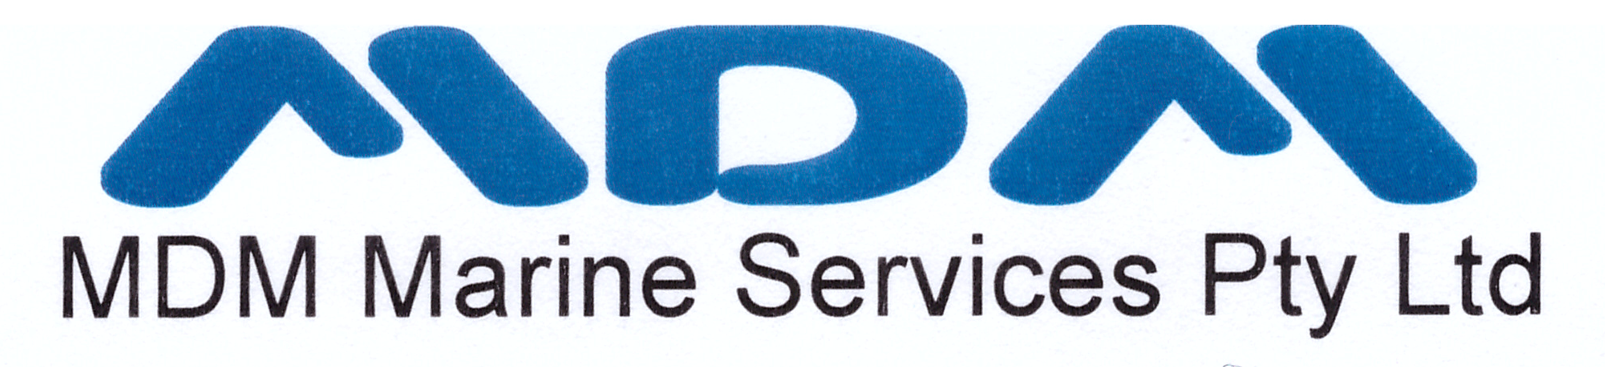 MDM logo1